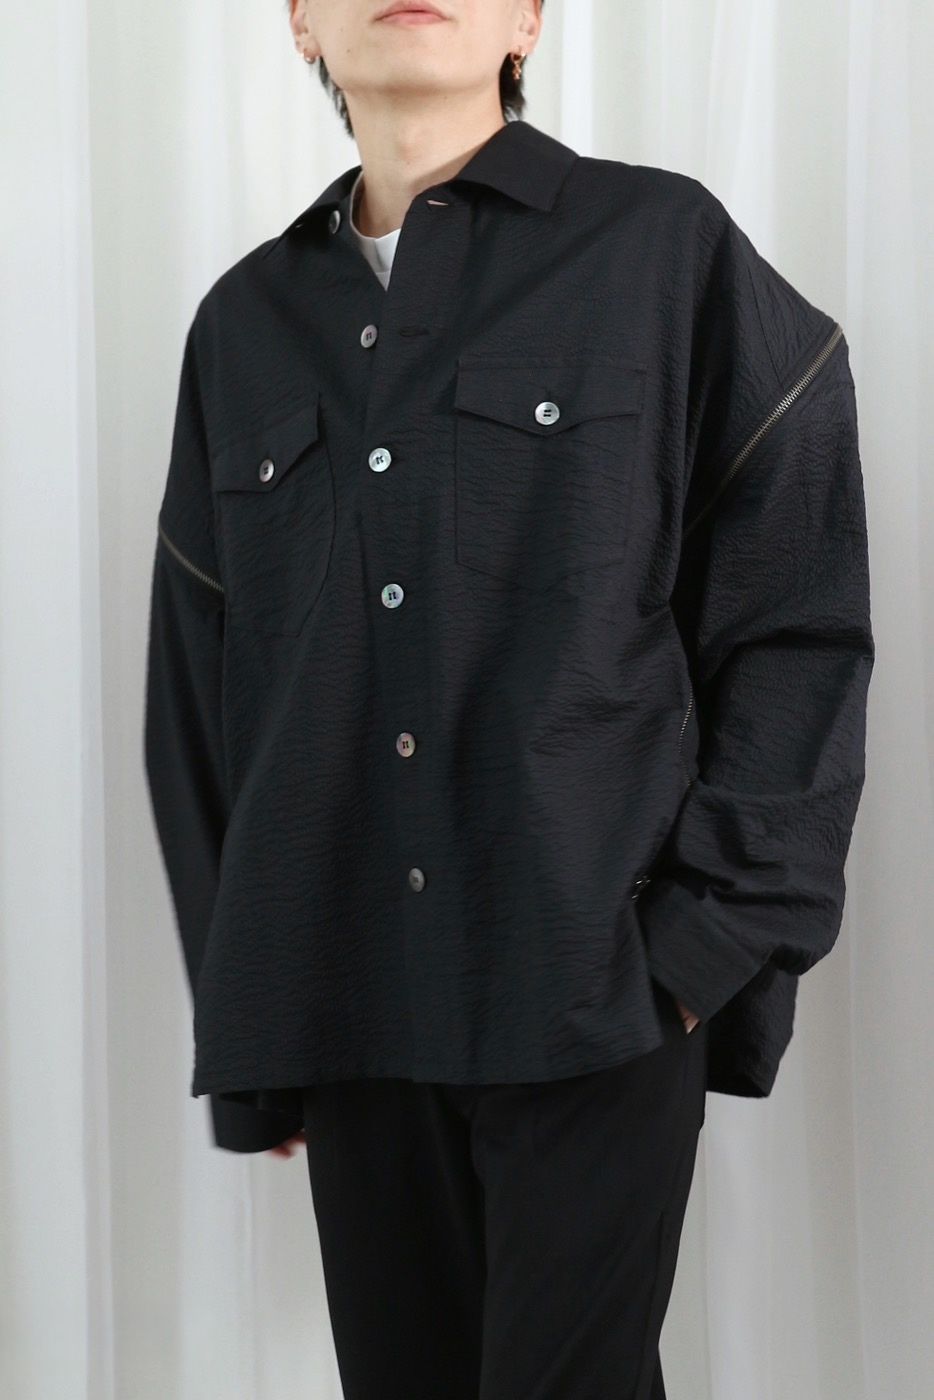 FACETASM - WRINKLE CRUSHED ZIP SHIRT / リンクルクラッシュジップシャツ (ブラック) | Sir online  store / サー オンラインストア